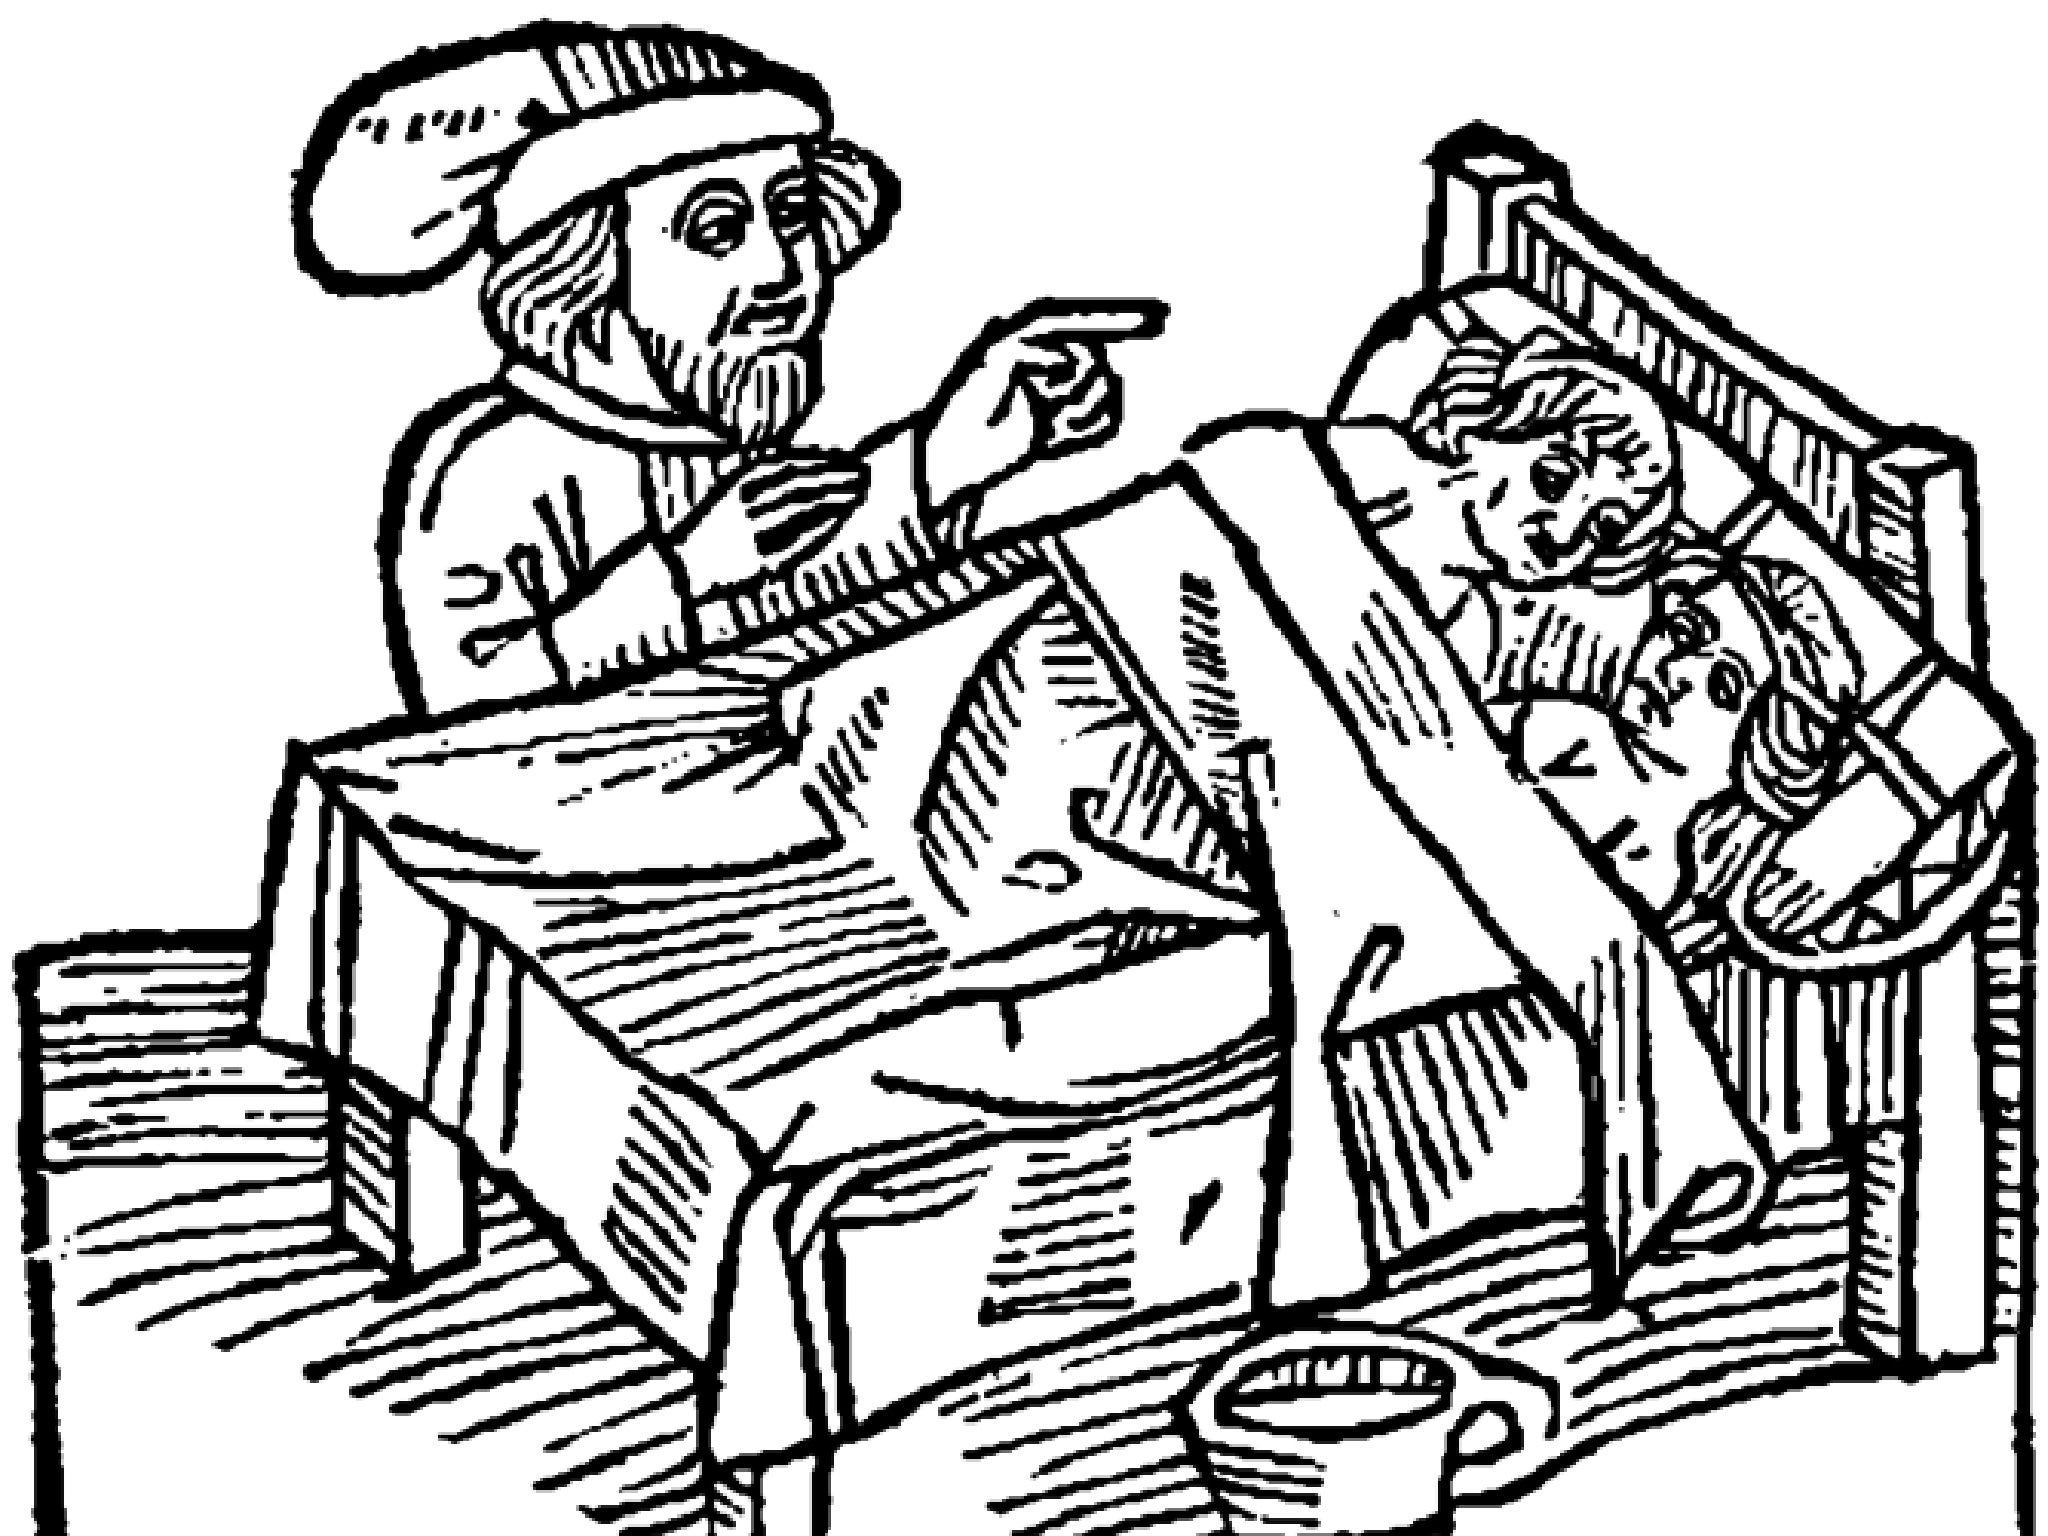 The defloration rite, 1484.